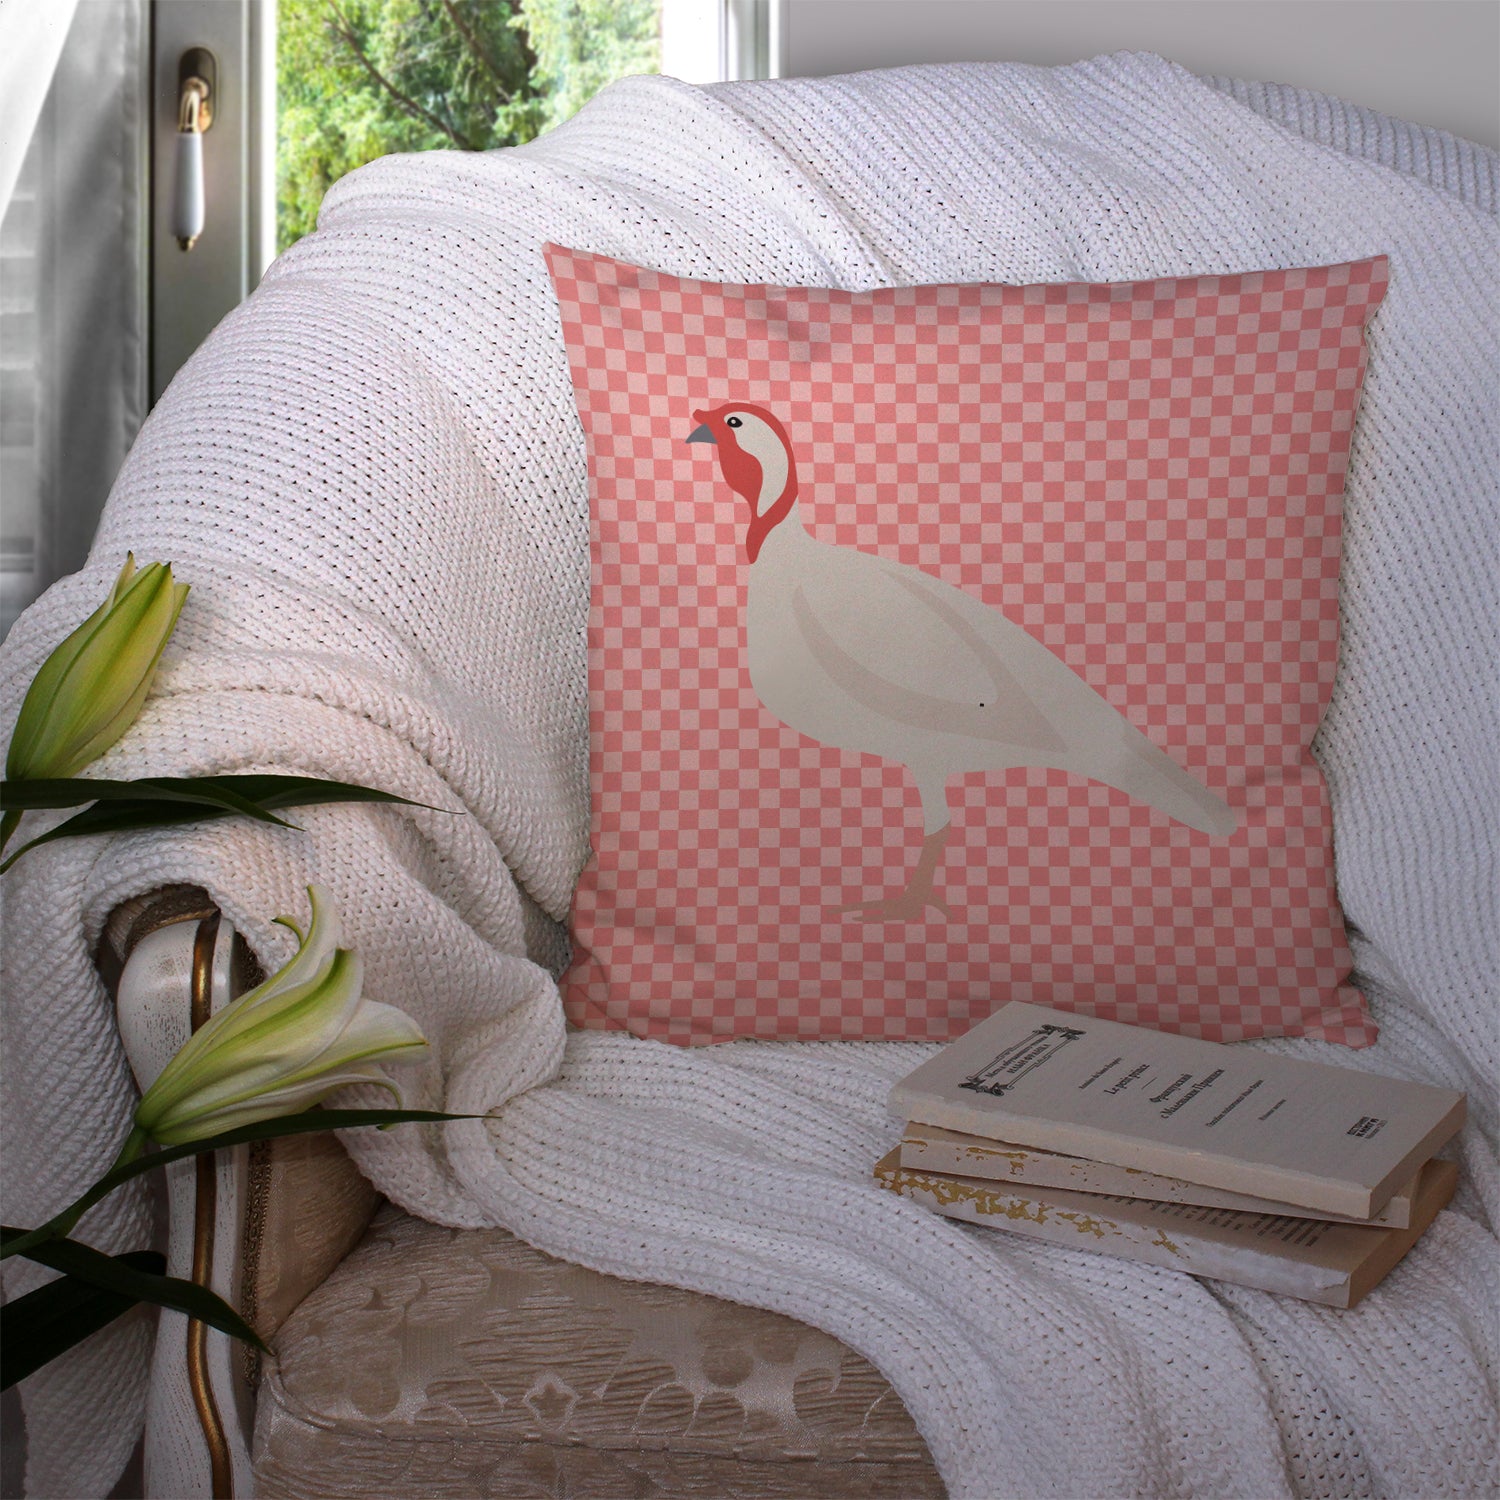 Beltsville Small White Turkey Hen Pink Check Fabric Decorative Pillow BB7989PW1414 - the-store.com